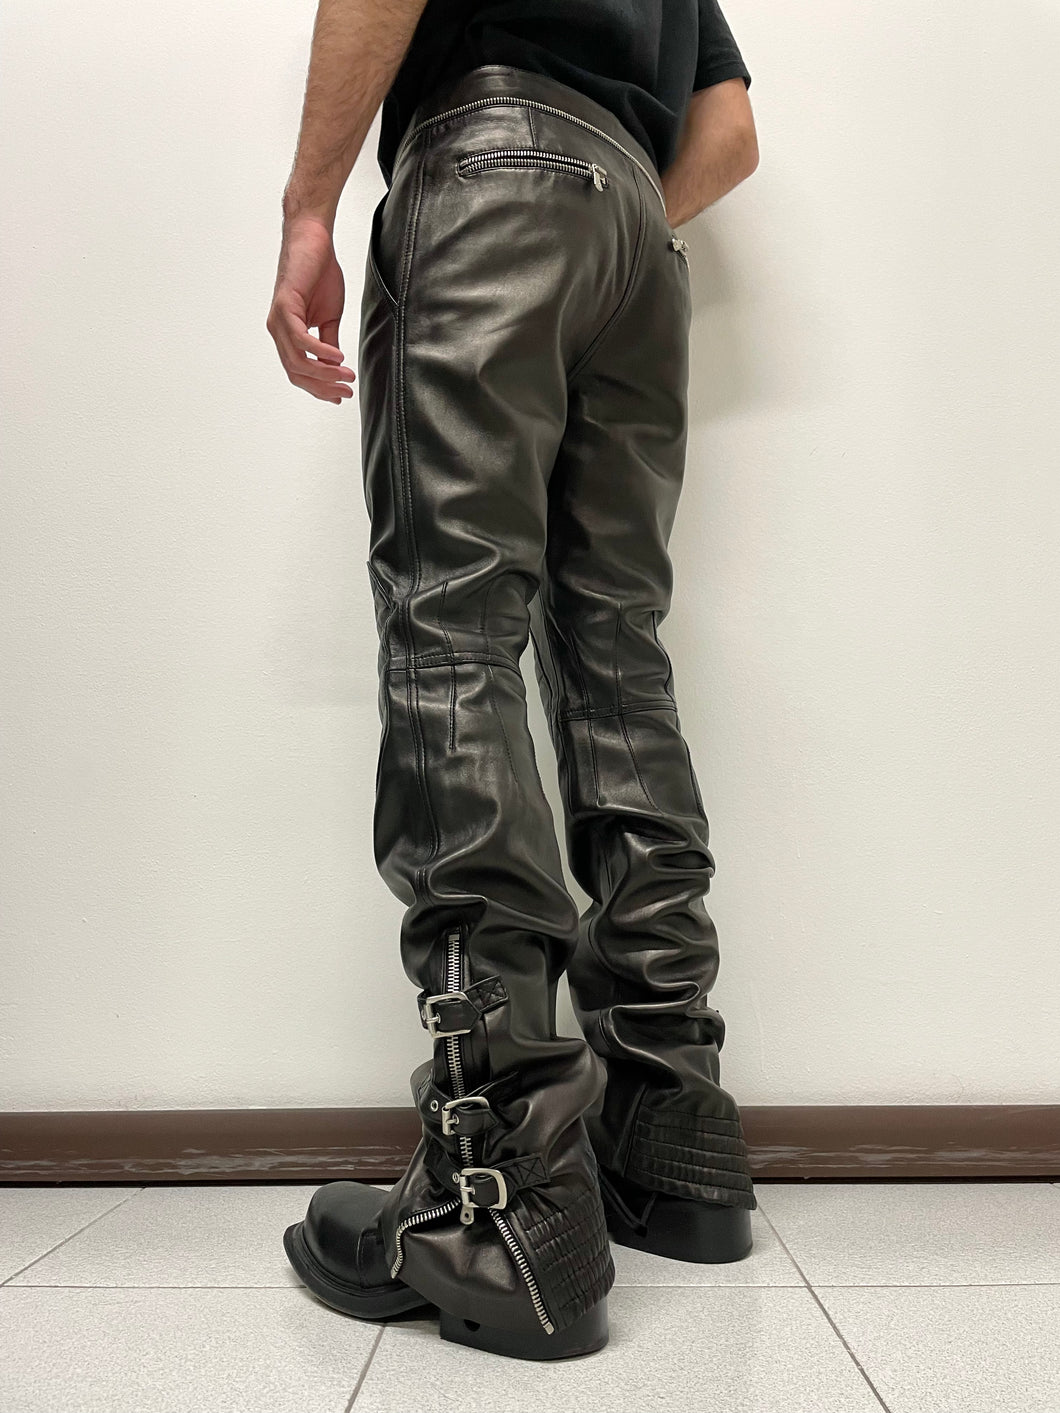 AW2003 Dolce & Gabbana leather bondage biker pants